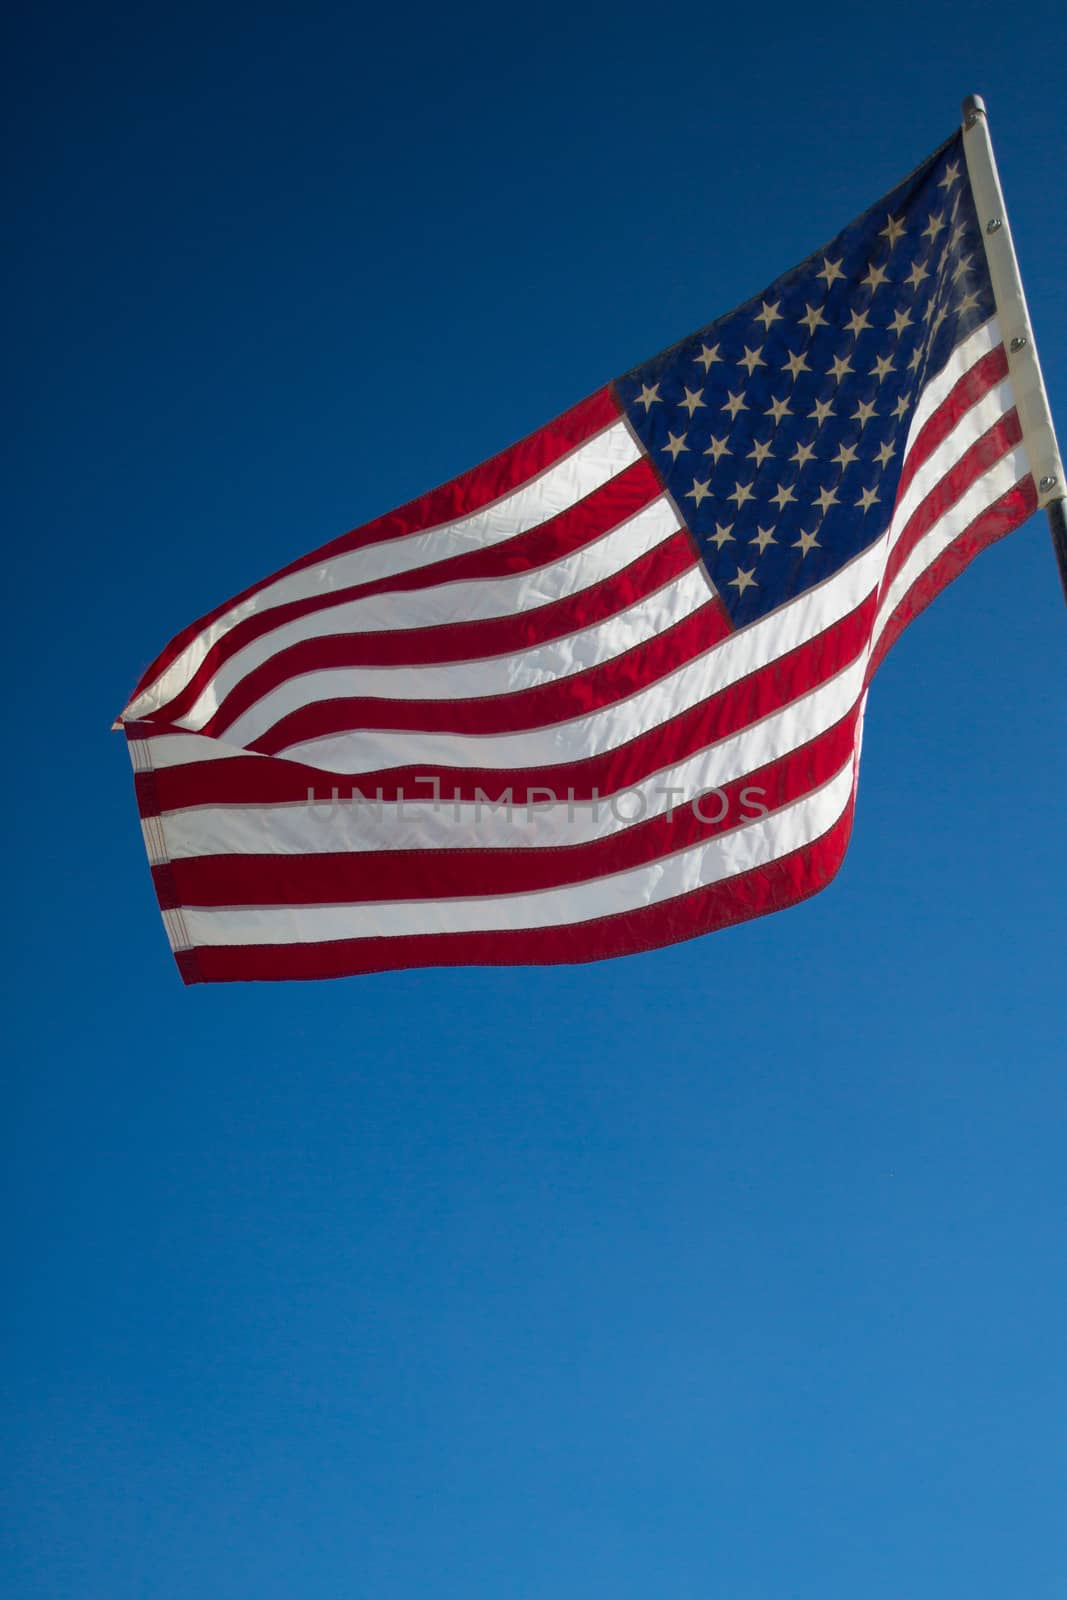 Waving American flag against cloudy sky